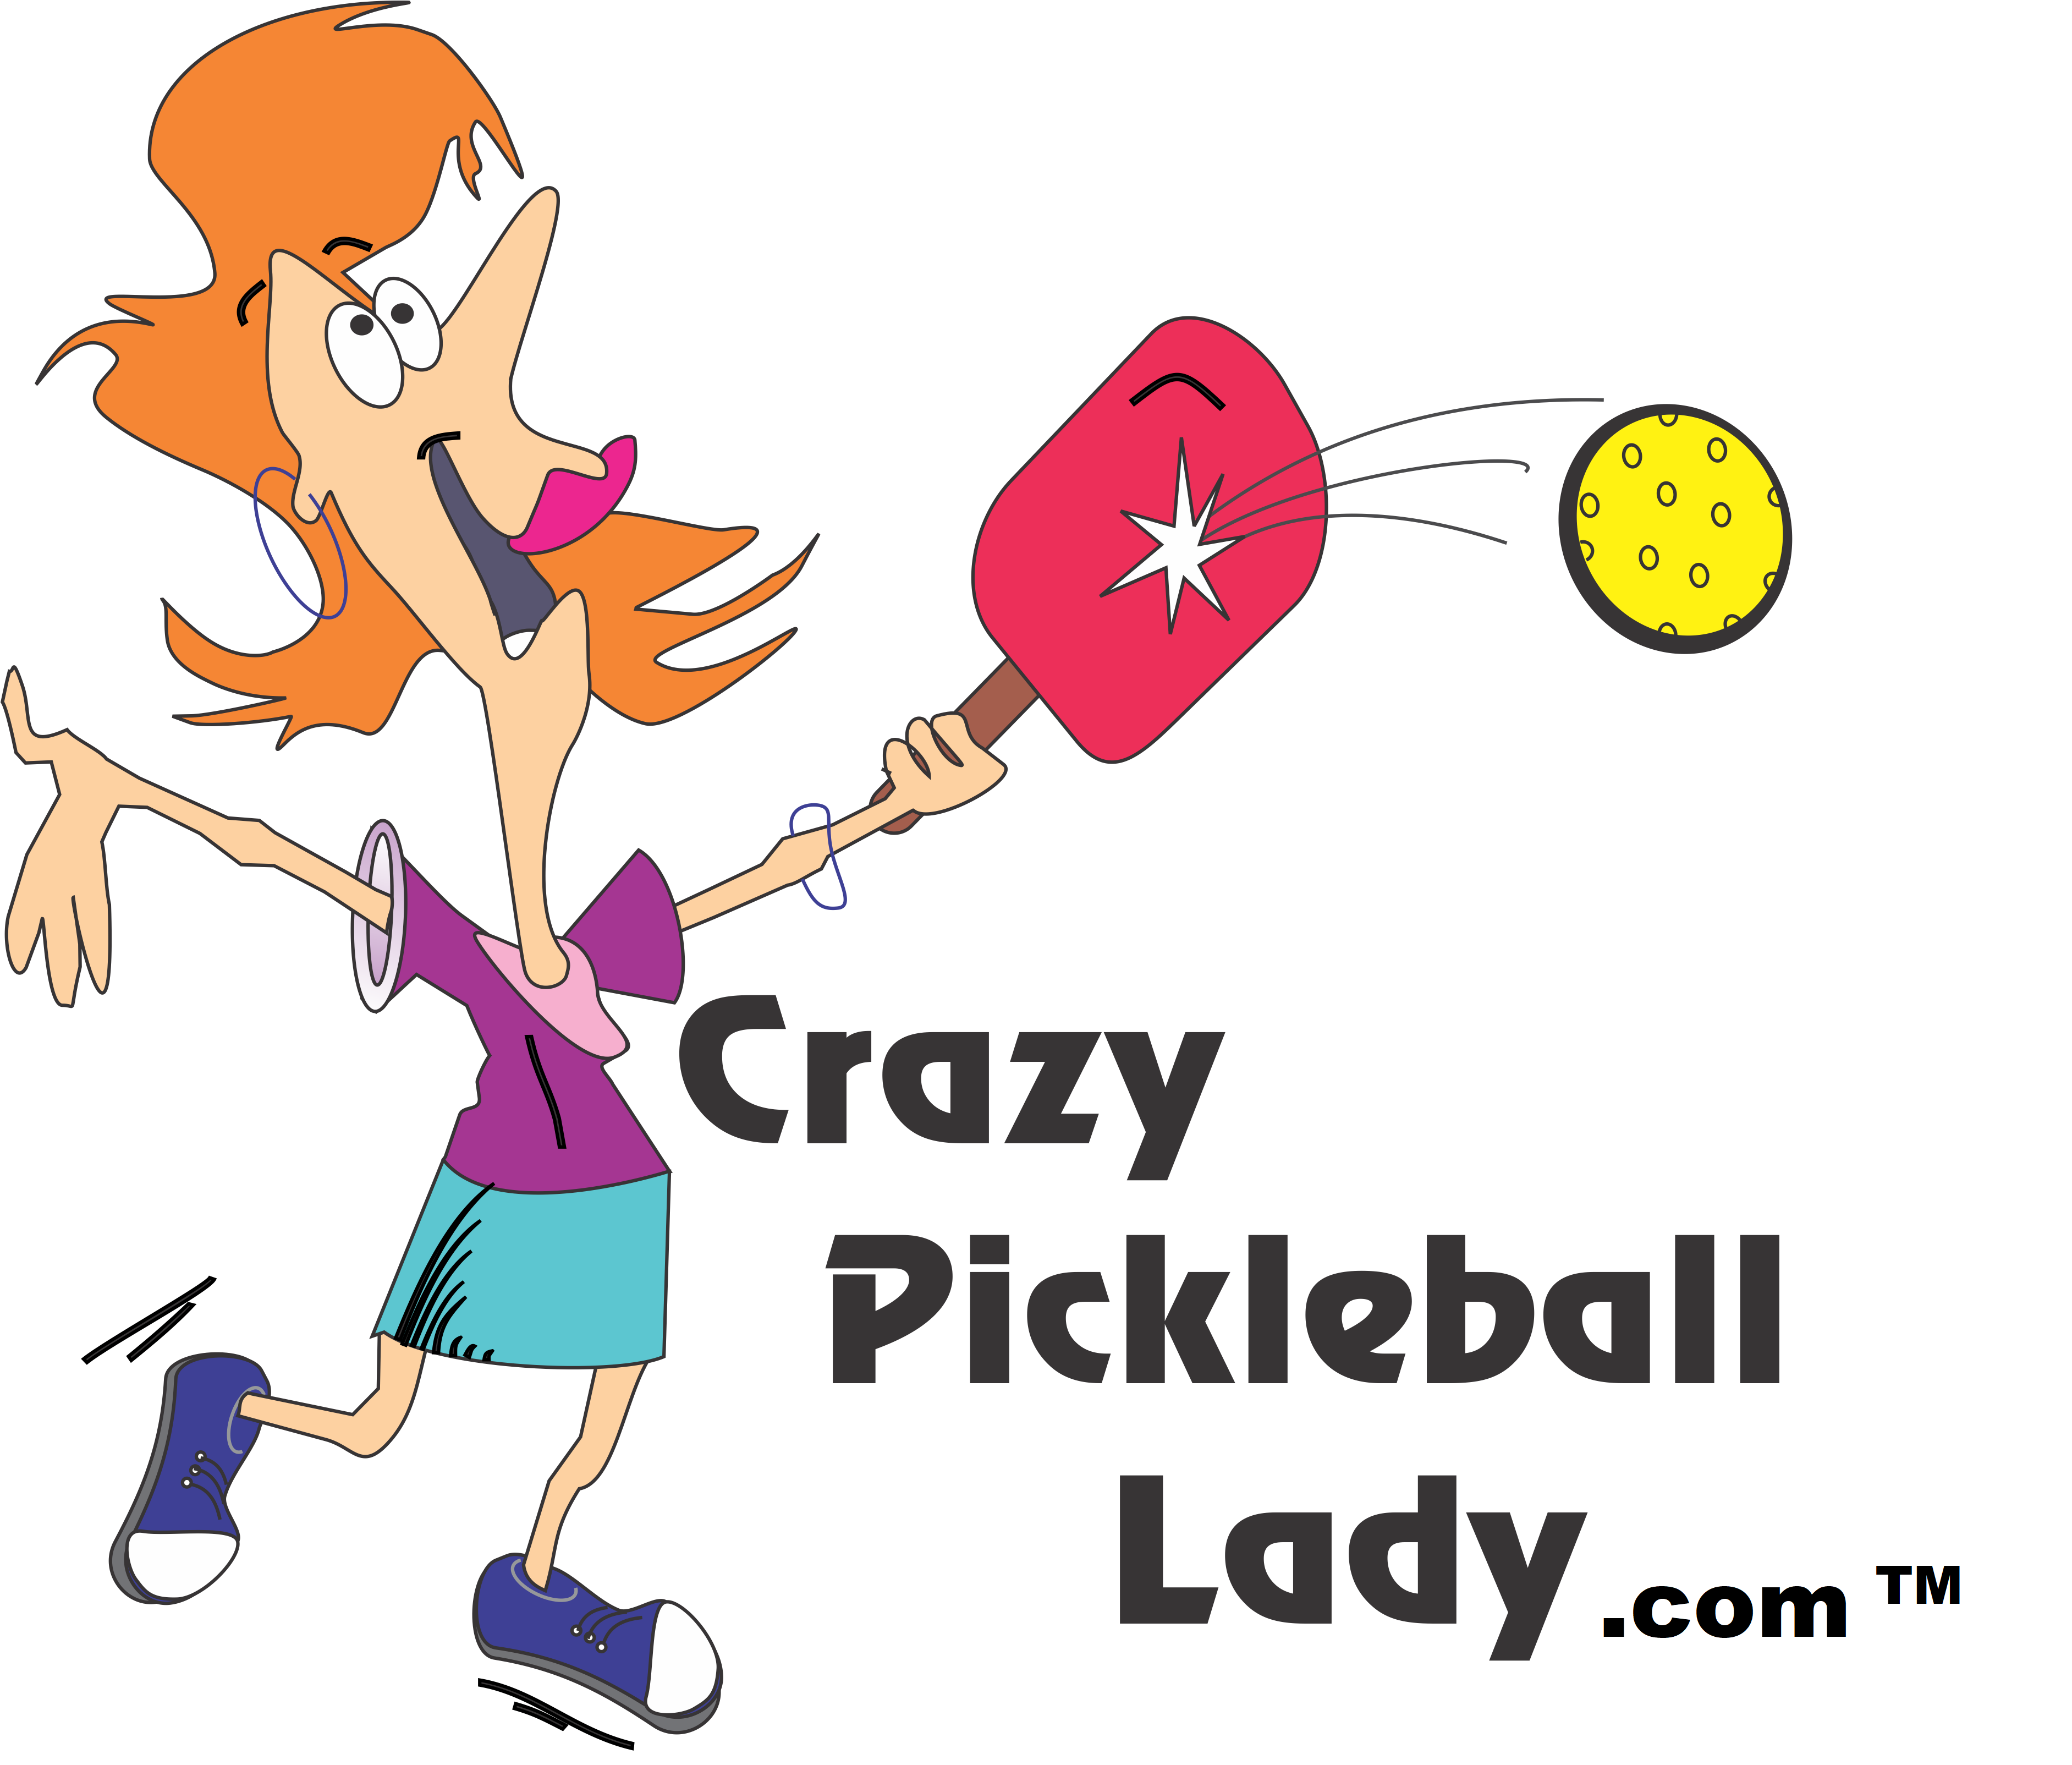 Crazy Pickleball Lady